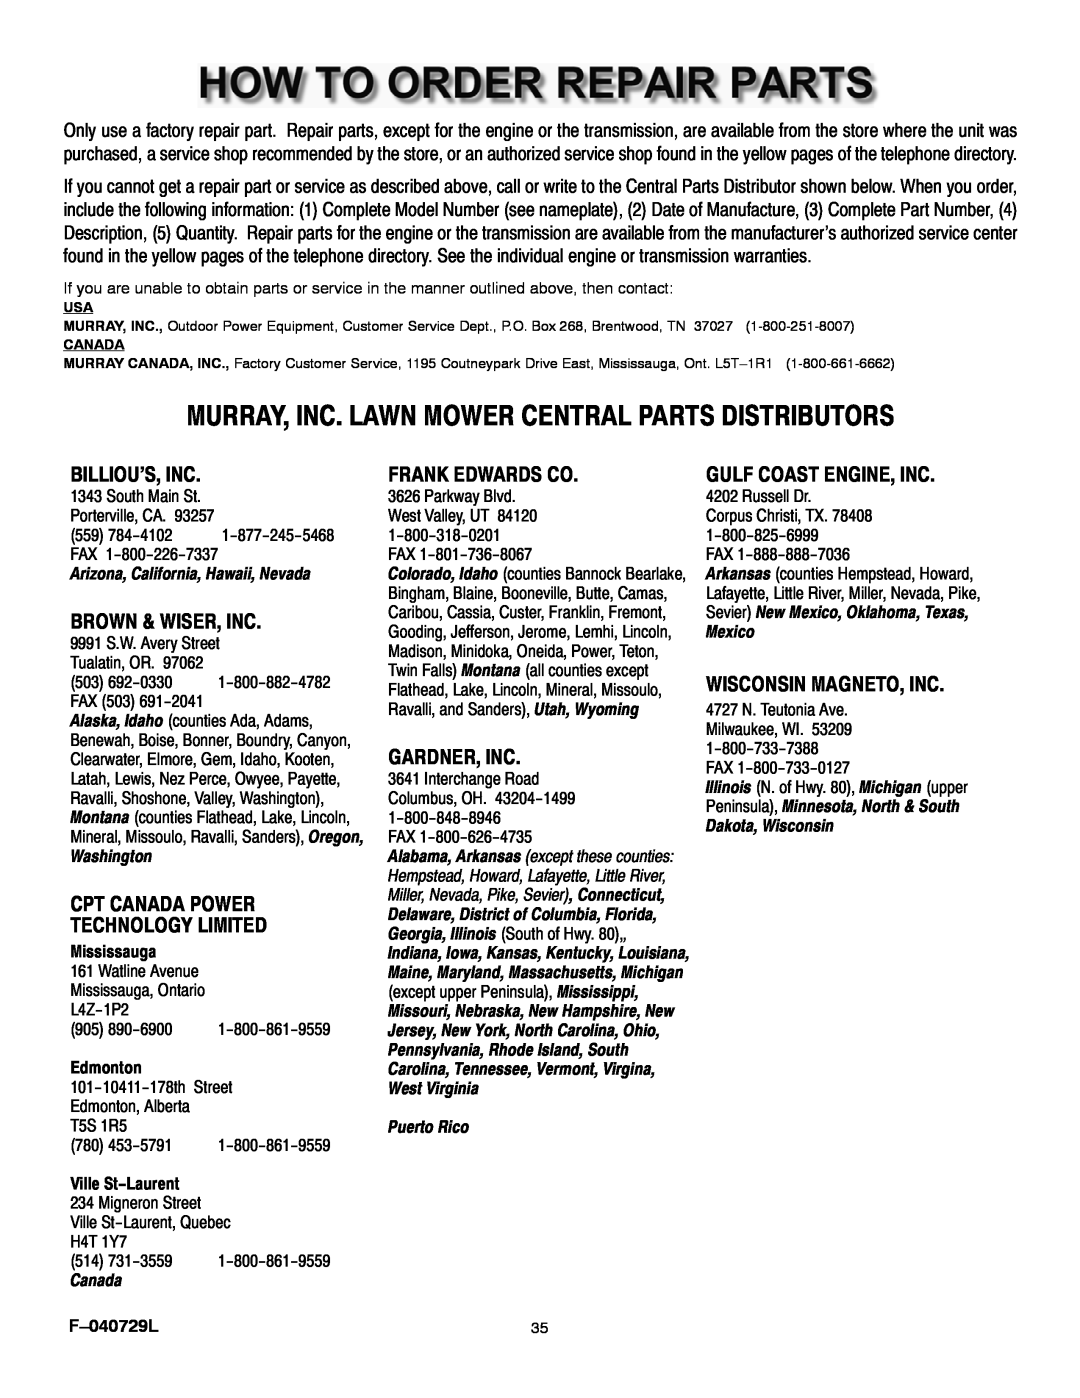 Murray 425620x92A Murray, Inc. Lawn Mower Central Parts Distributors, Billious, Inc, Brown & Wiser, Inc, Frank Edwards Co 